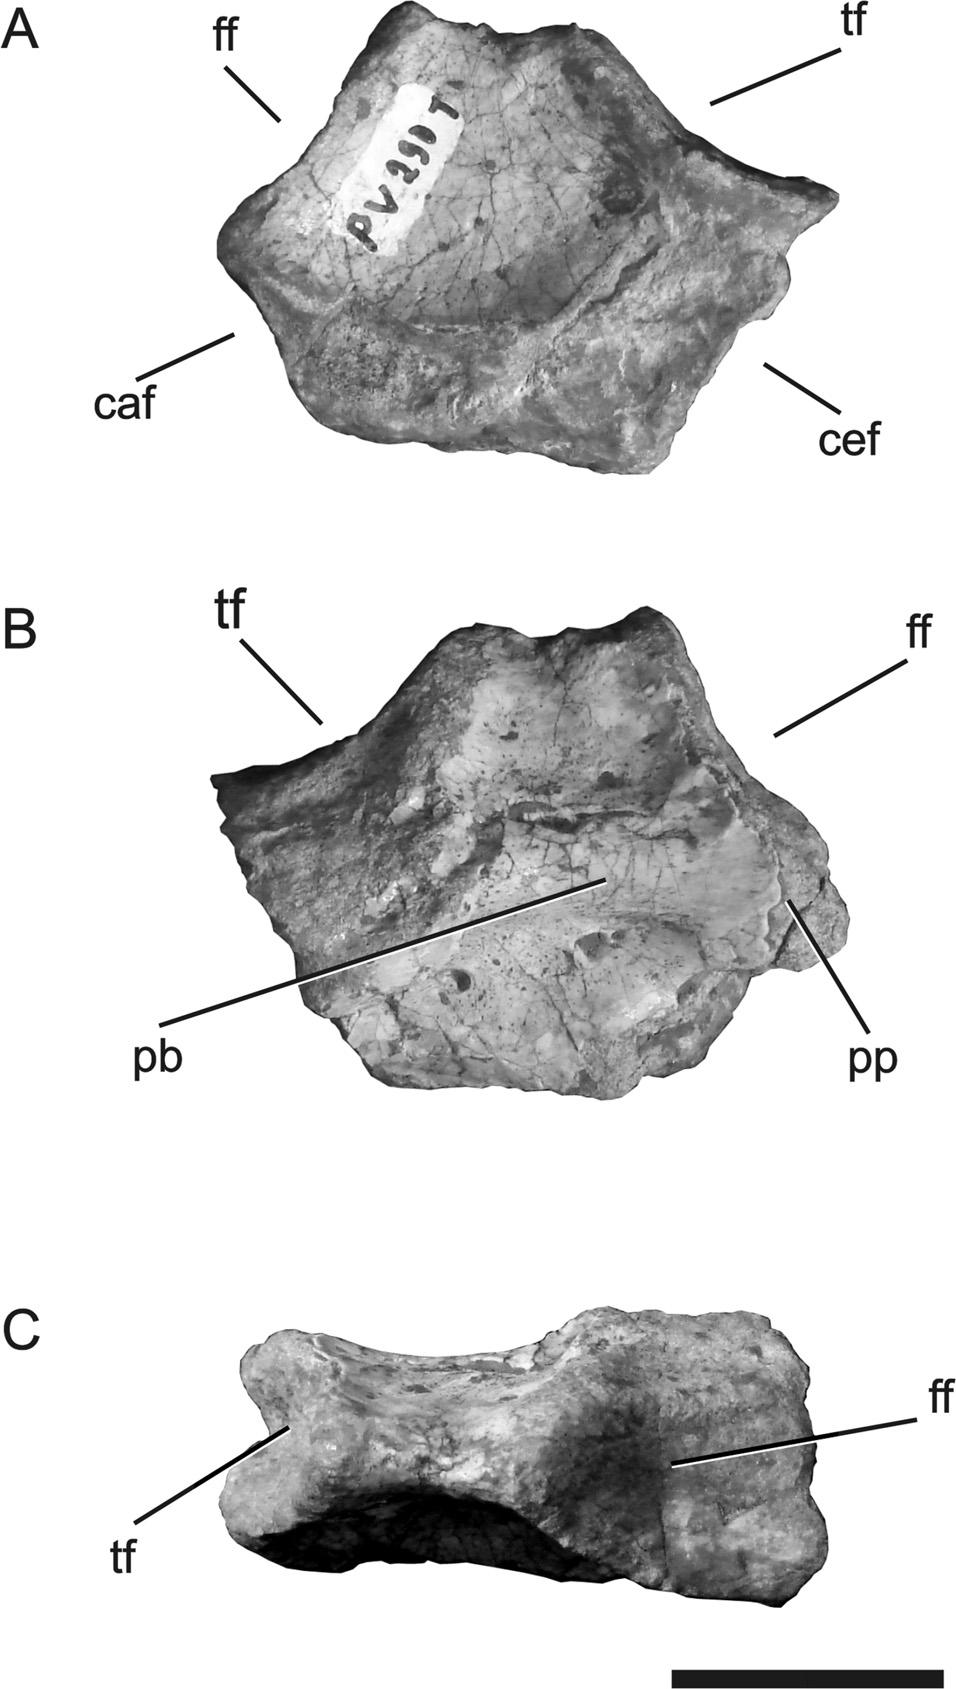 MONTEFELTRO ET AL. TEYUMBAITA SULCOGNATHUS POSTCRANIAL ANATOMY 81 FIGURE 18. Teyumbaita sulcognathus (UFRGS-PV-0290T). Right astragalus. A, anterior view; B, posterior view; C, proximal view.